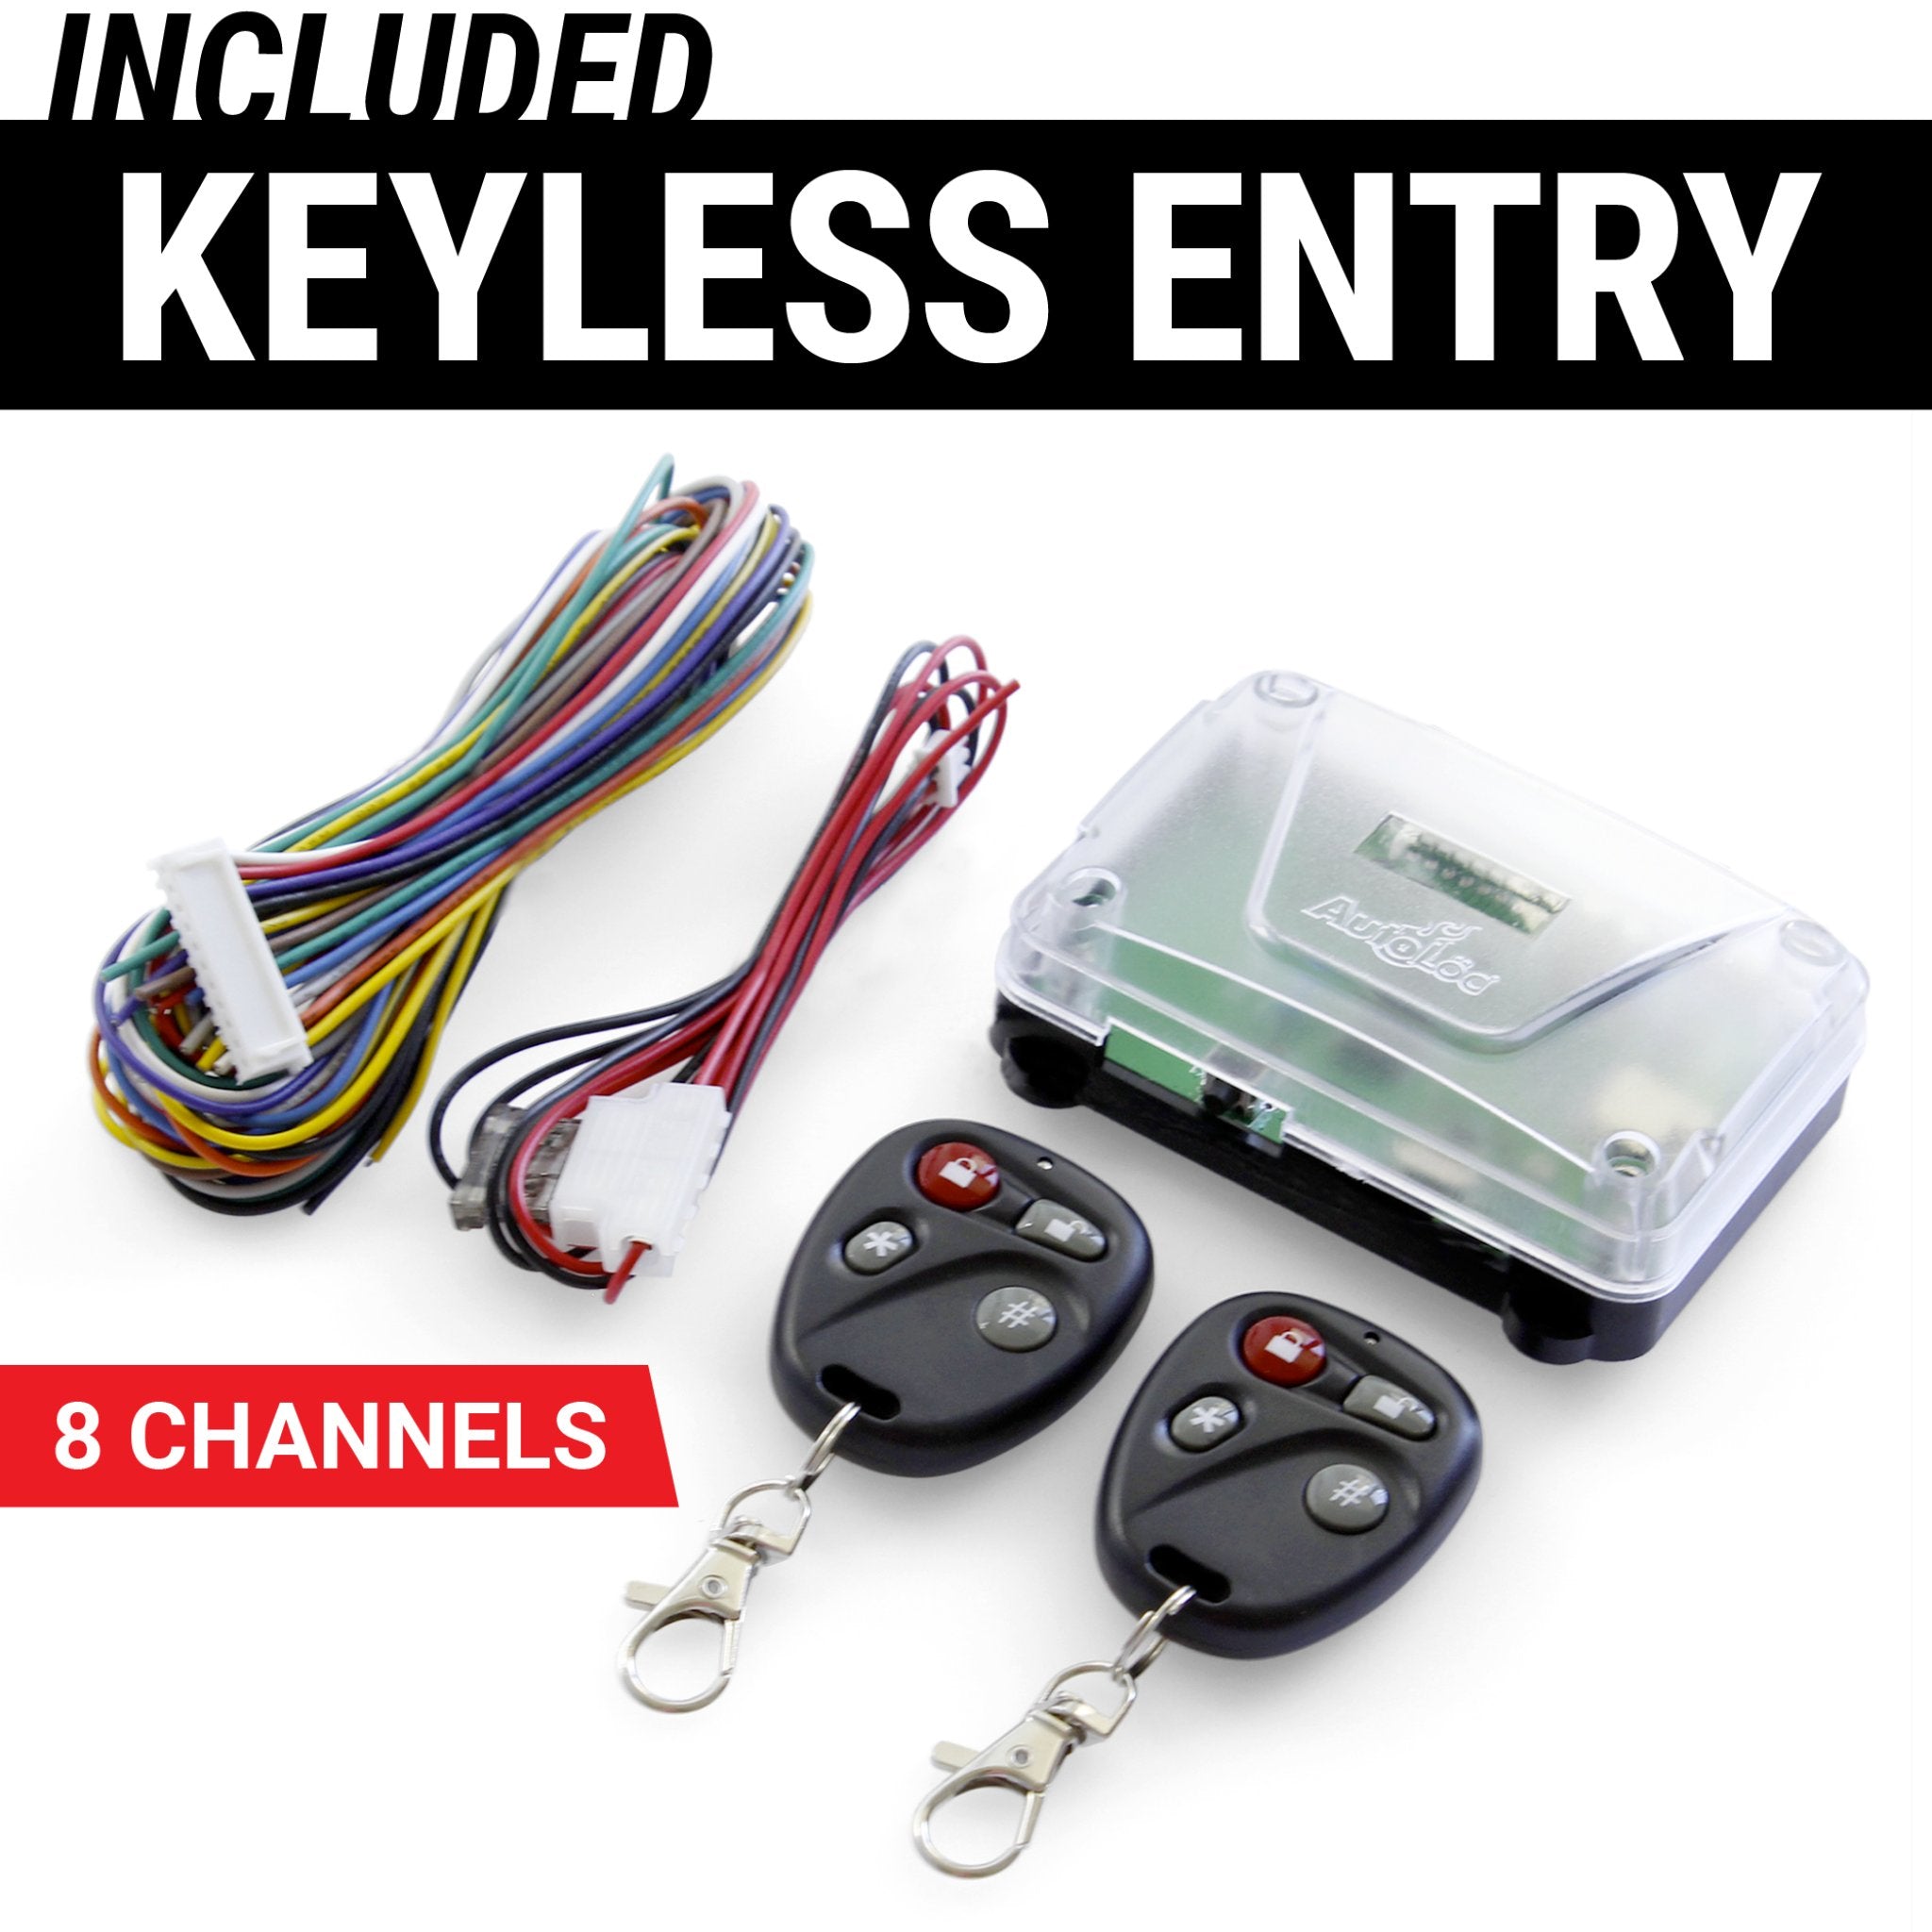 Autoloc Remote Car Power Window Control Kit w/ & 8 Channel Keyless Entry System